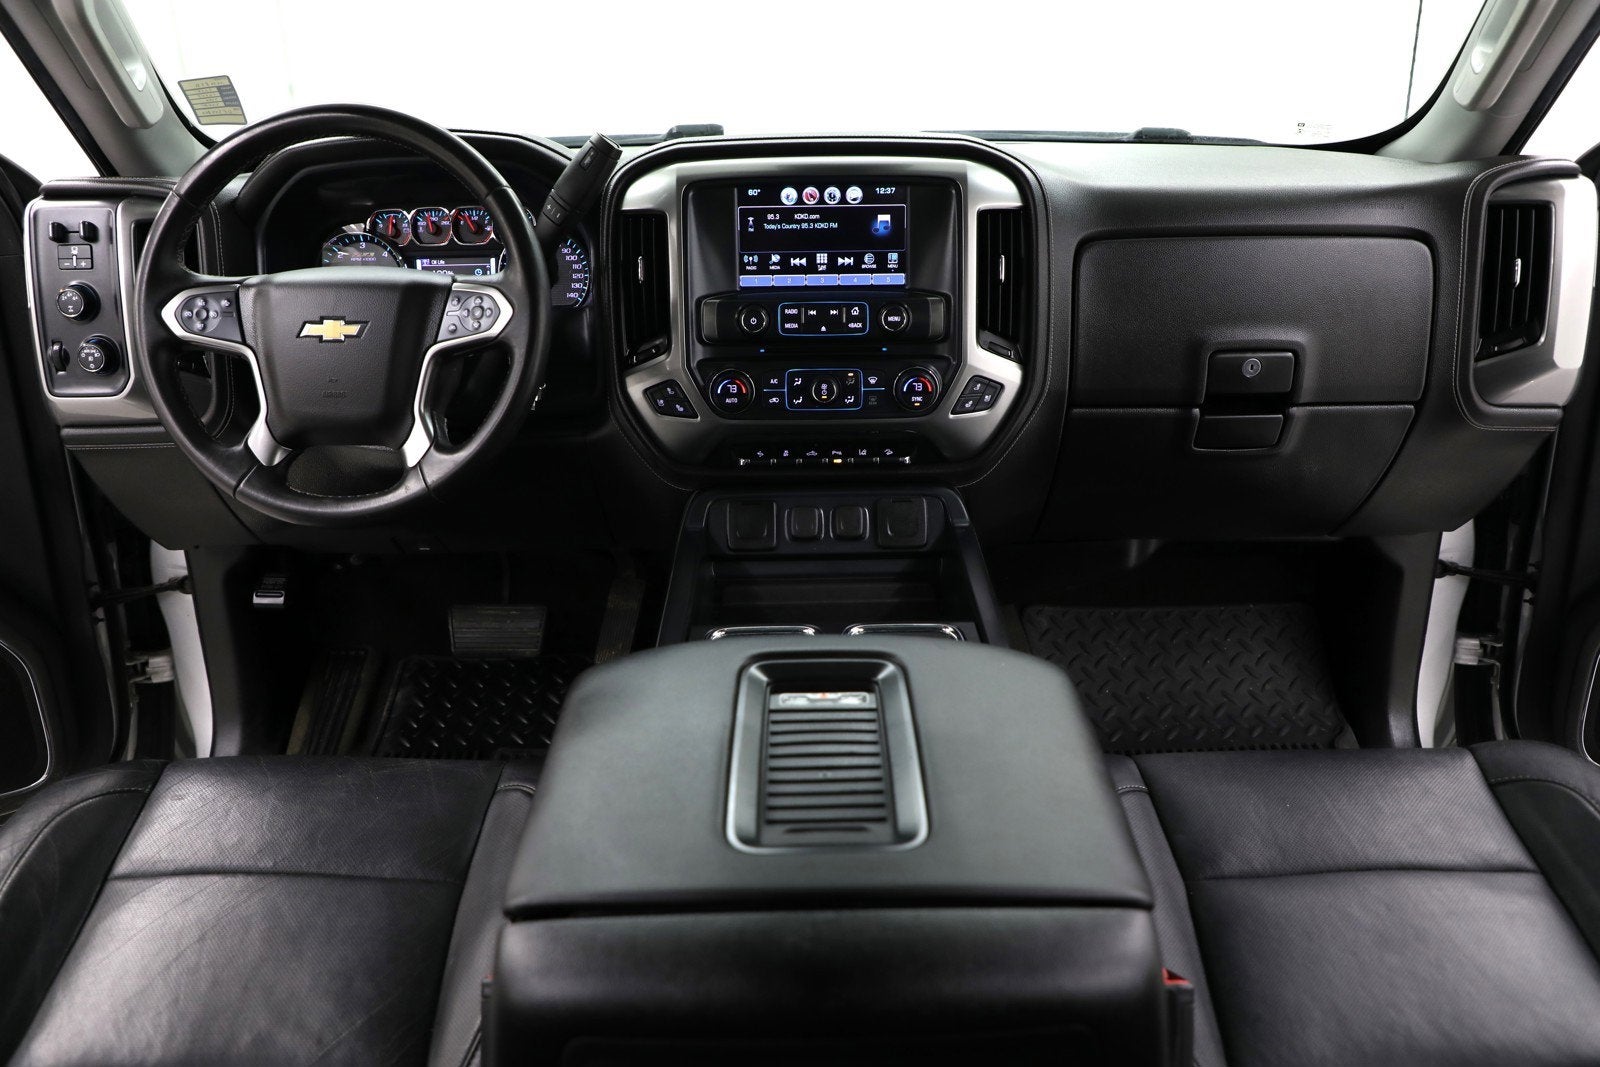 2016 Chevrolet Silverado 3500HD Crew Cab LTZ Z71 4WD 6.0L V8 Heated Cooled Black Leather Sunroof Navigation Bose Remote Start Memory